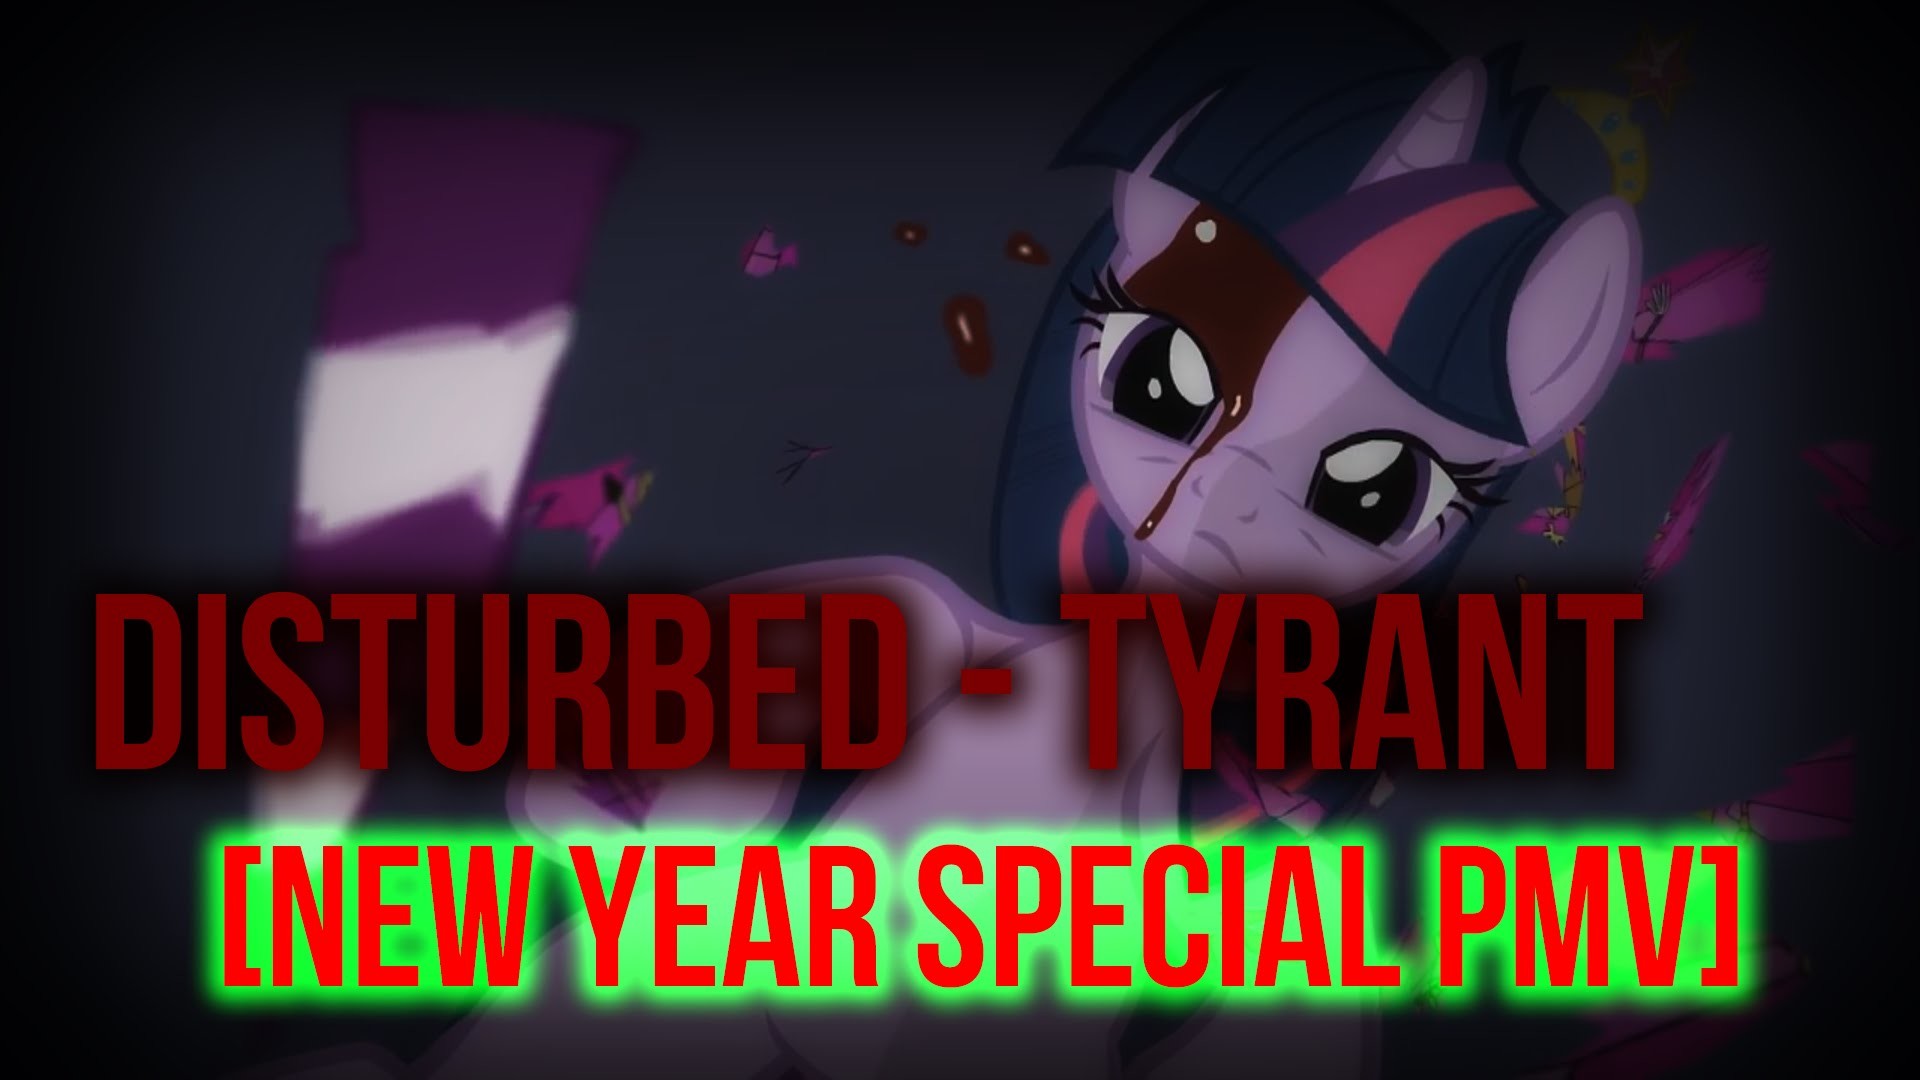 1920x1080 [New Year Special PMV] Disturbed - Tyrant